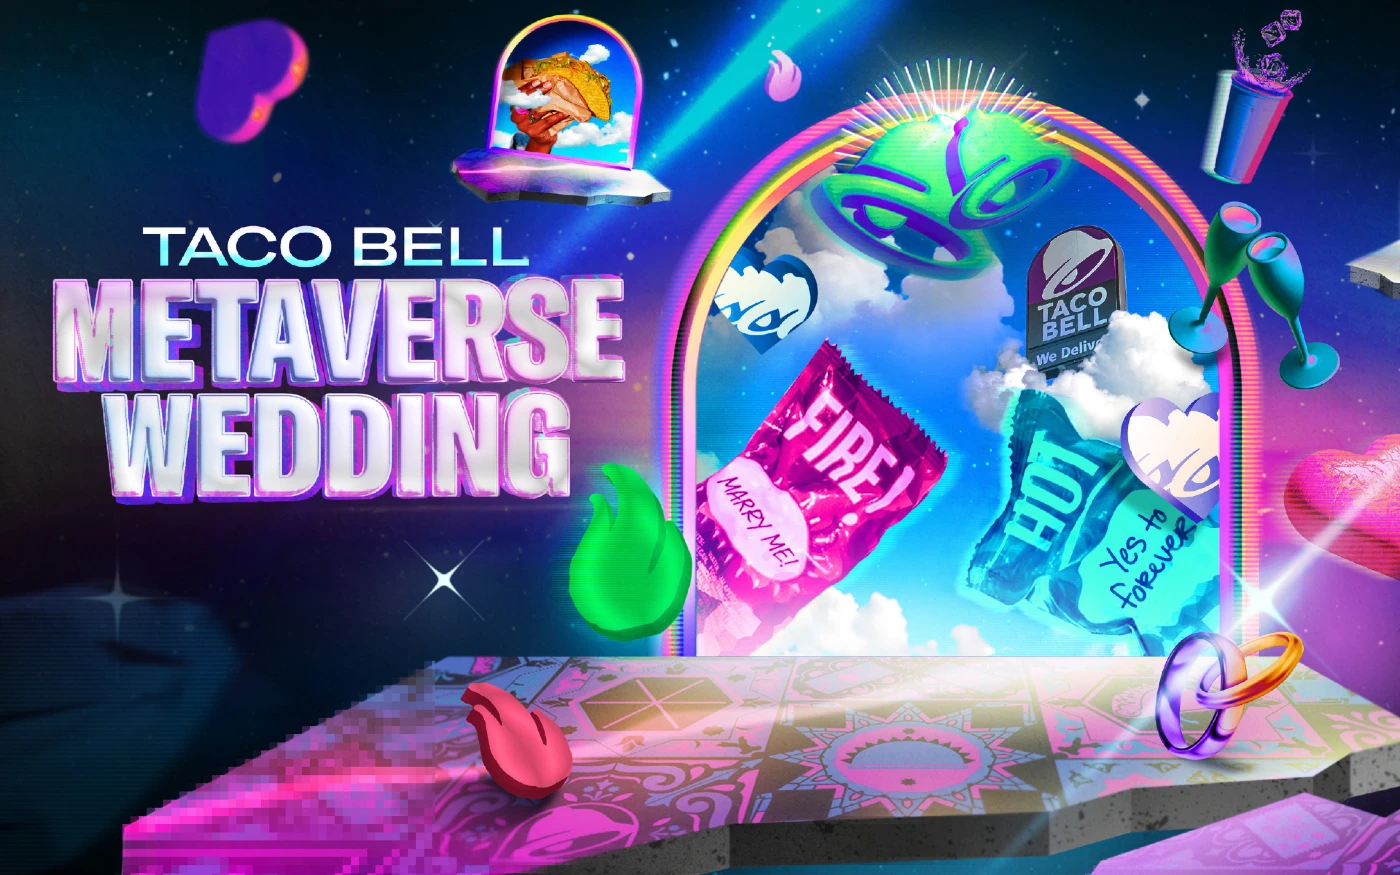 Taco Bell Metaverse Wedding